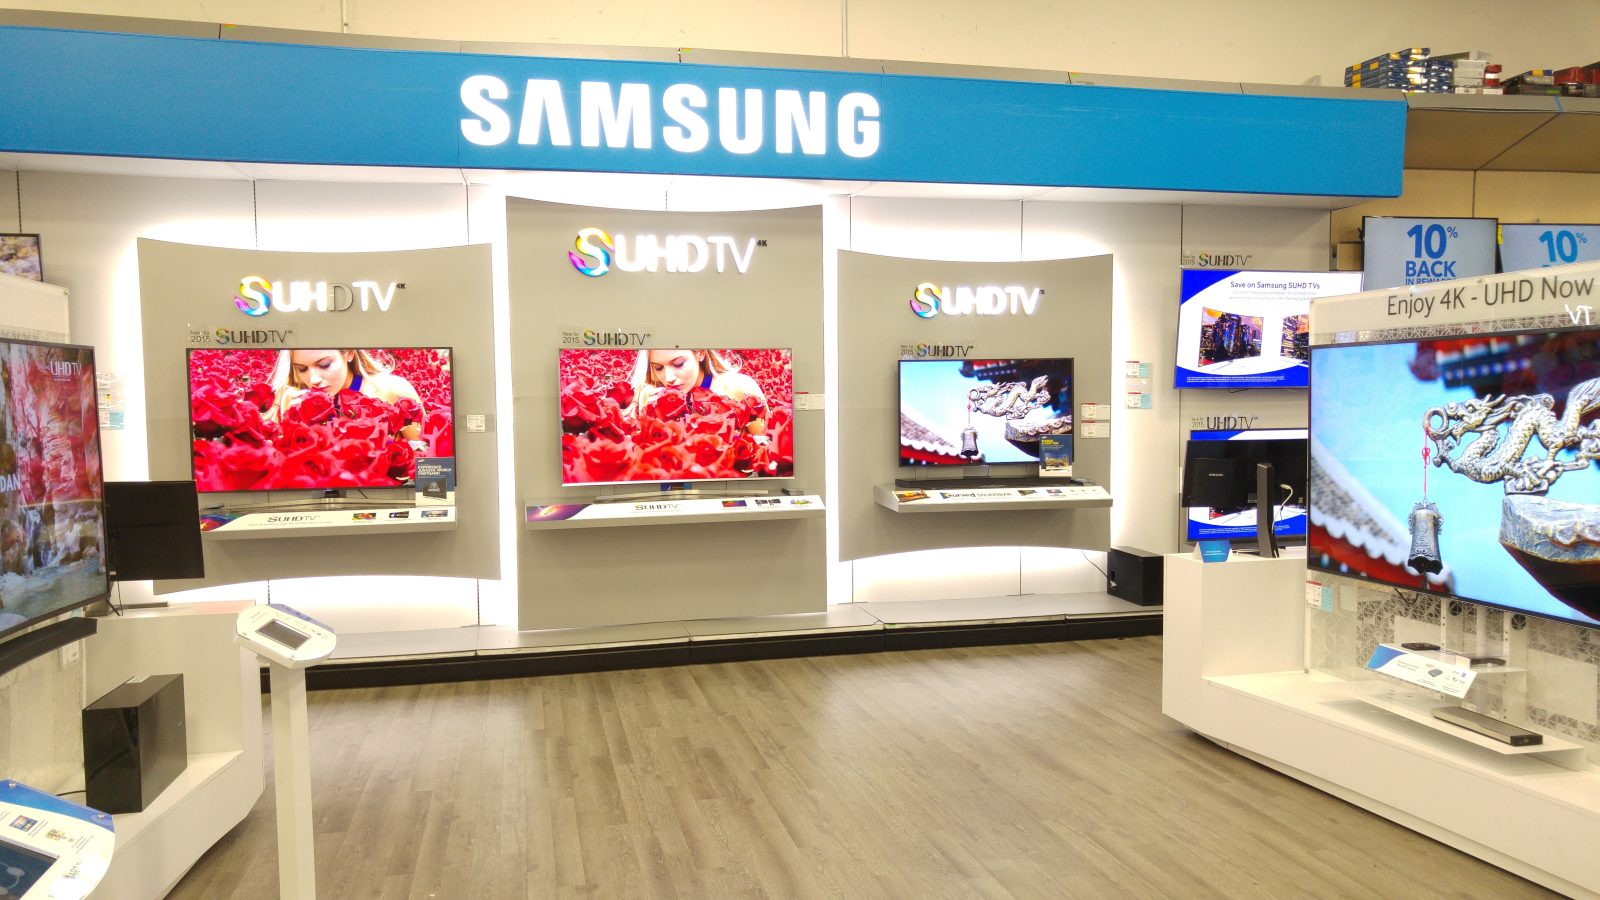 4K Samsung SUHD tv